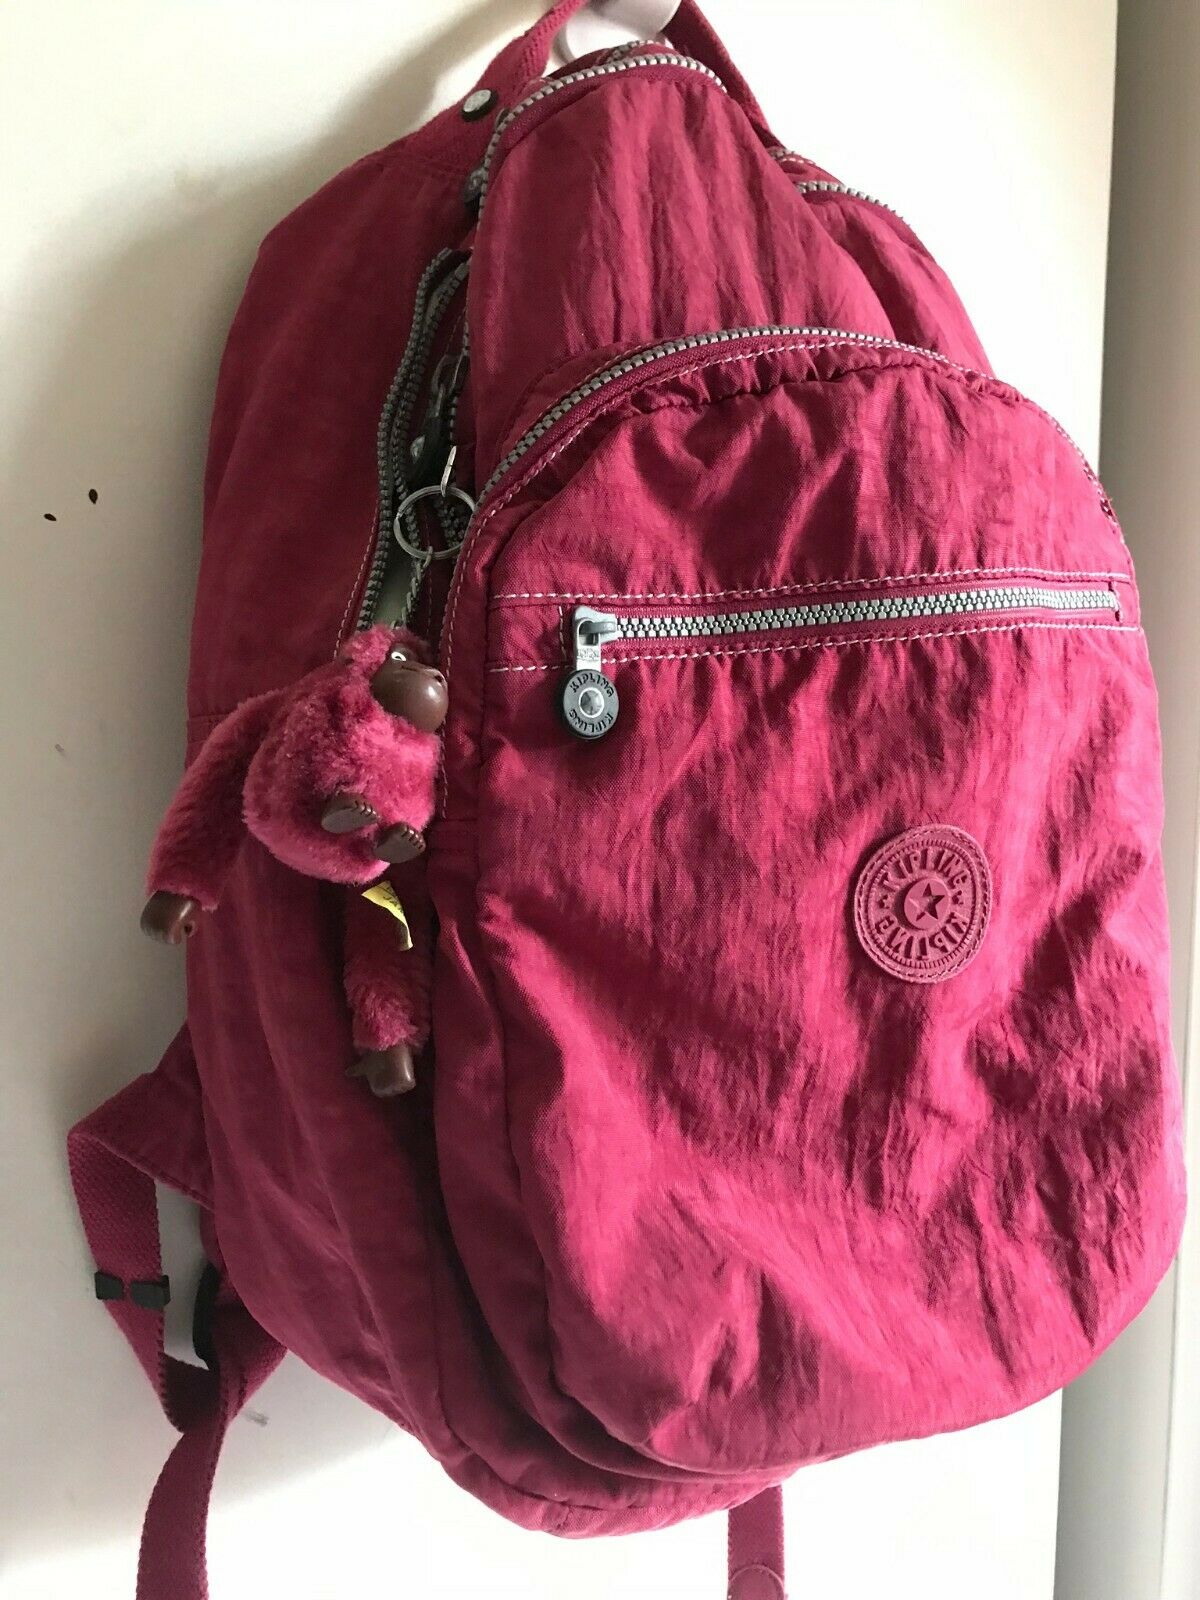 Kipling Red Backpack